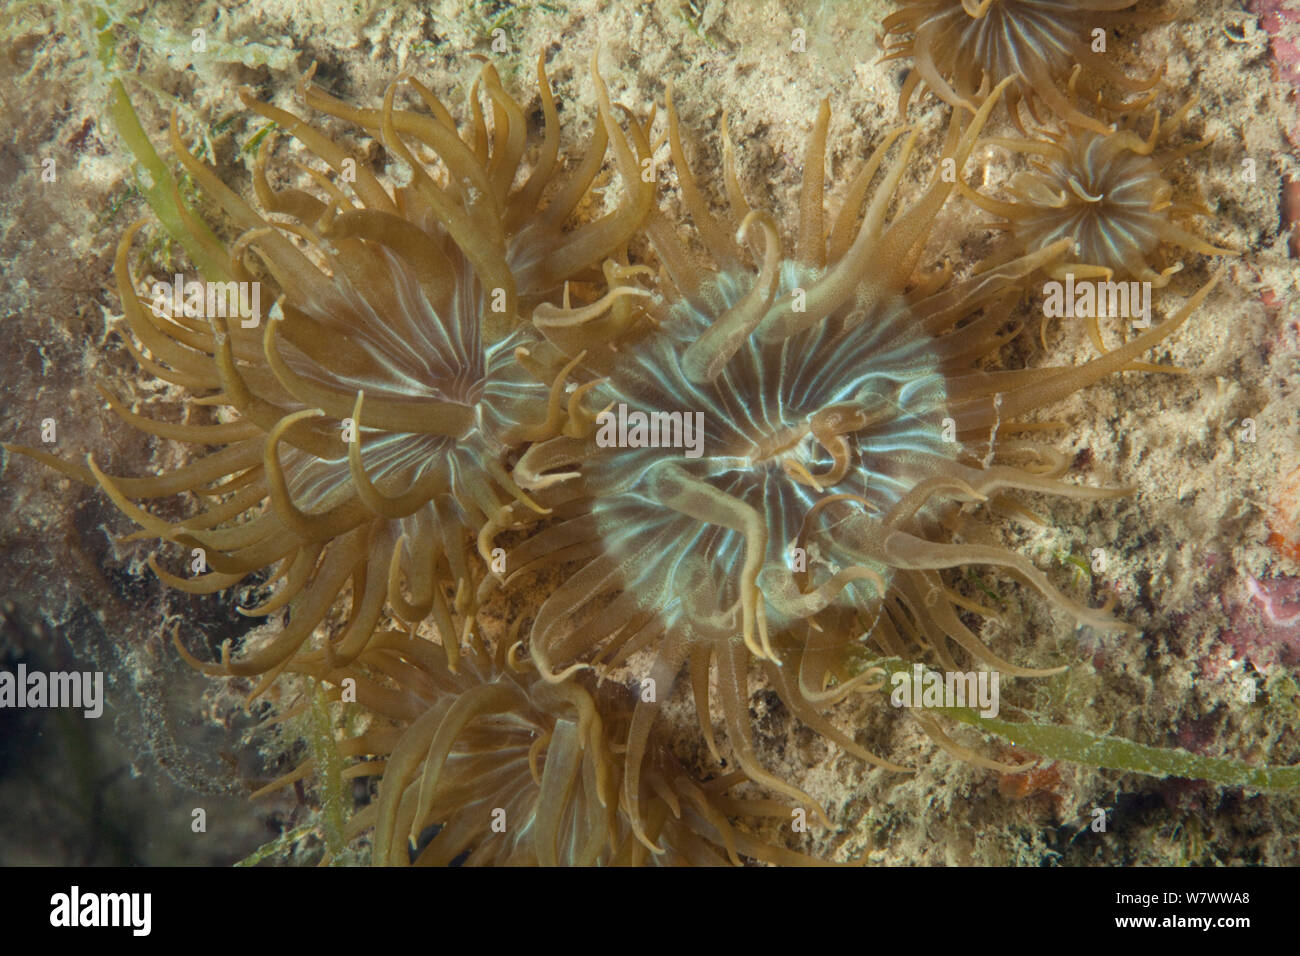 Trumpet anemone (Aiptasia mutabilis) Jersey, British Channel Islands. Stock Photo